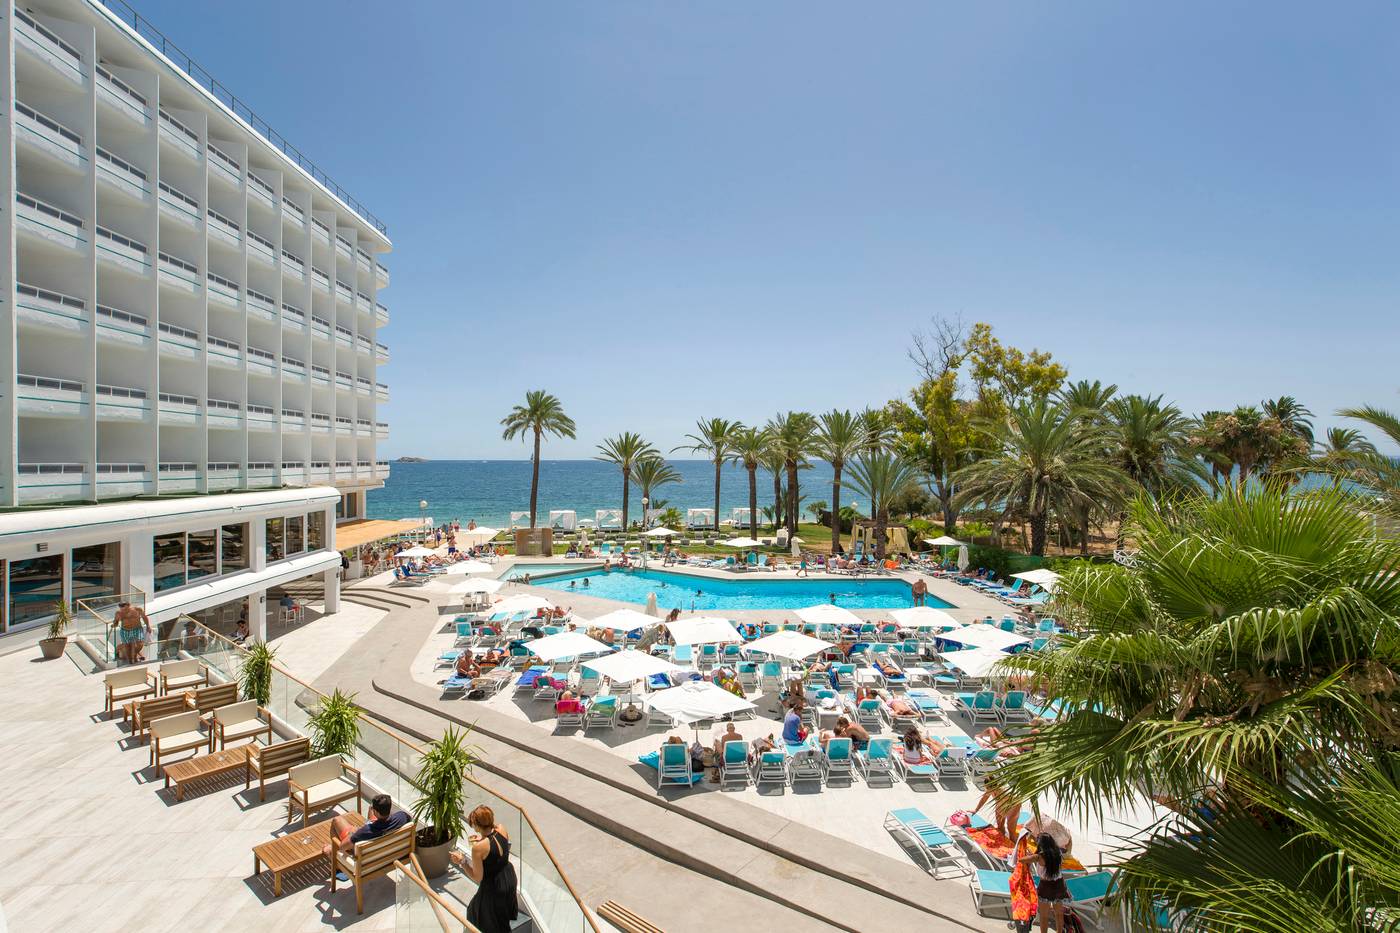 The New Algarb Hotel in Balearics, Ibiza, Spain